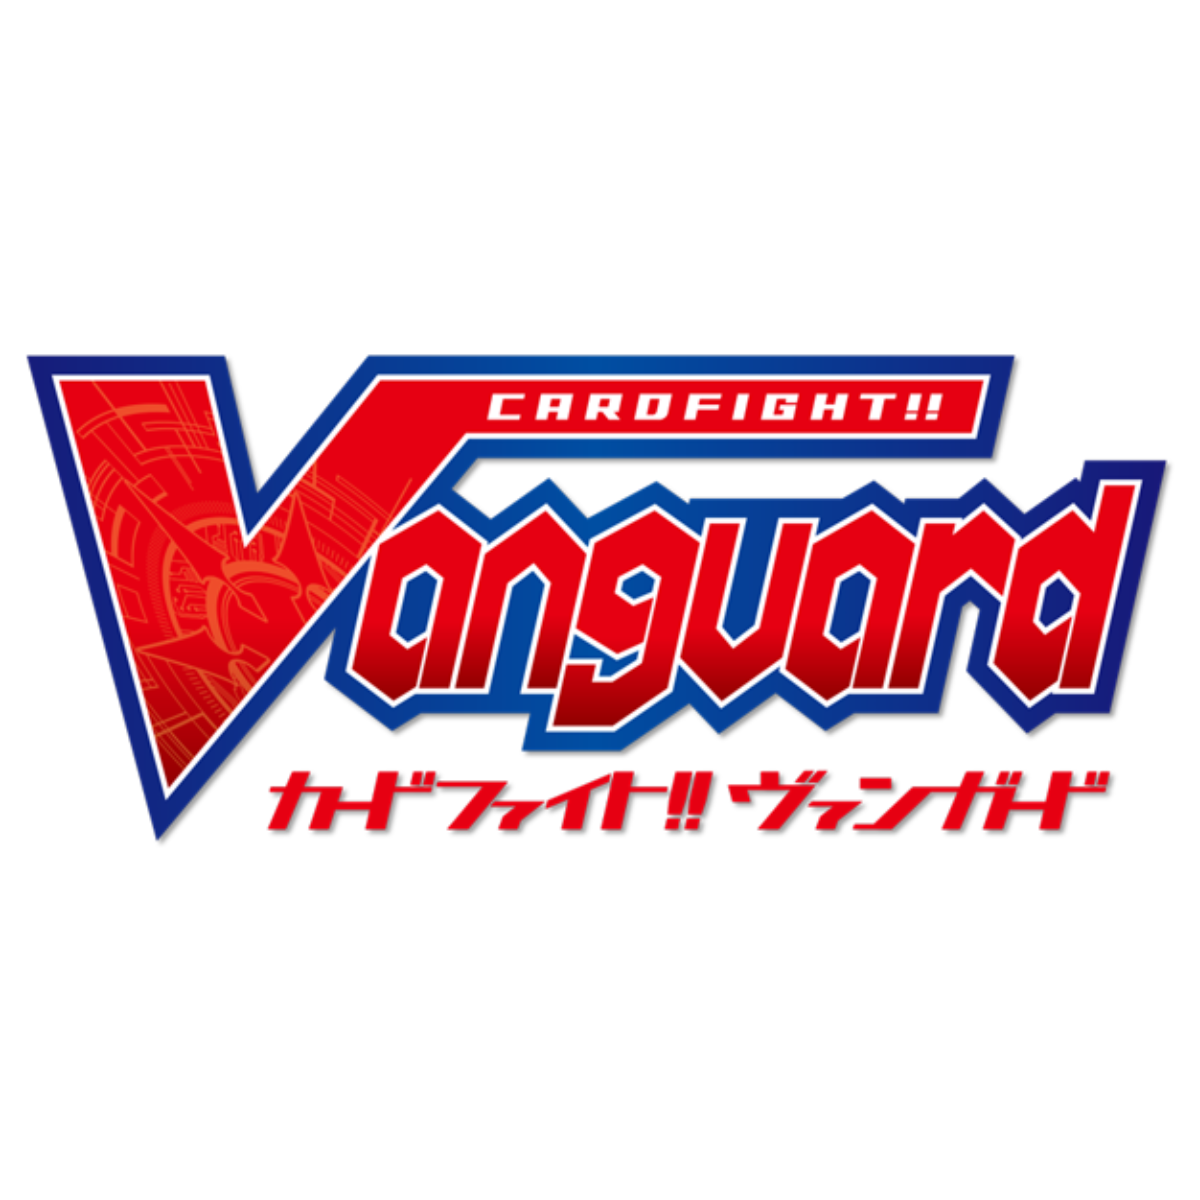 Bushiroad Deck Holder Collection -Card Fight!! Vanguard- "Phosphorescence Stream Herzelit" (Vol.814)-Bushiroad-Ace Cards & Collectibles